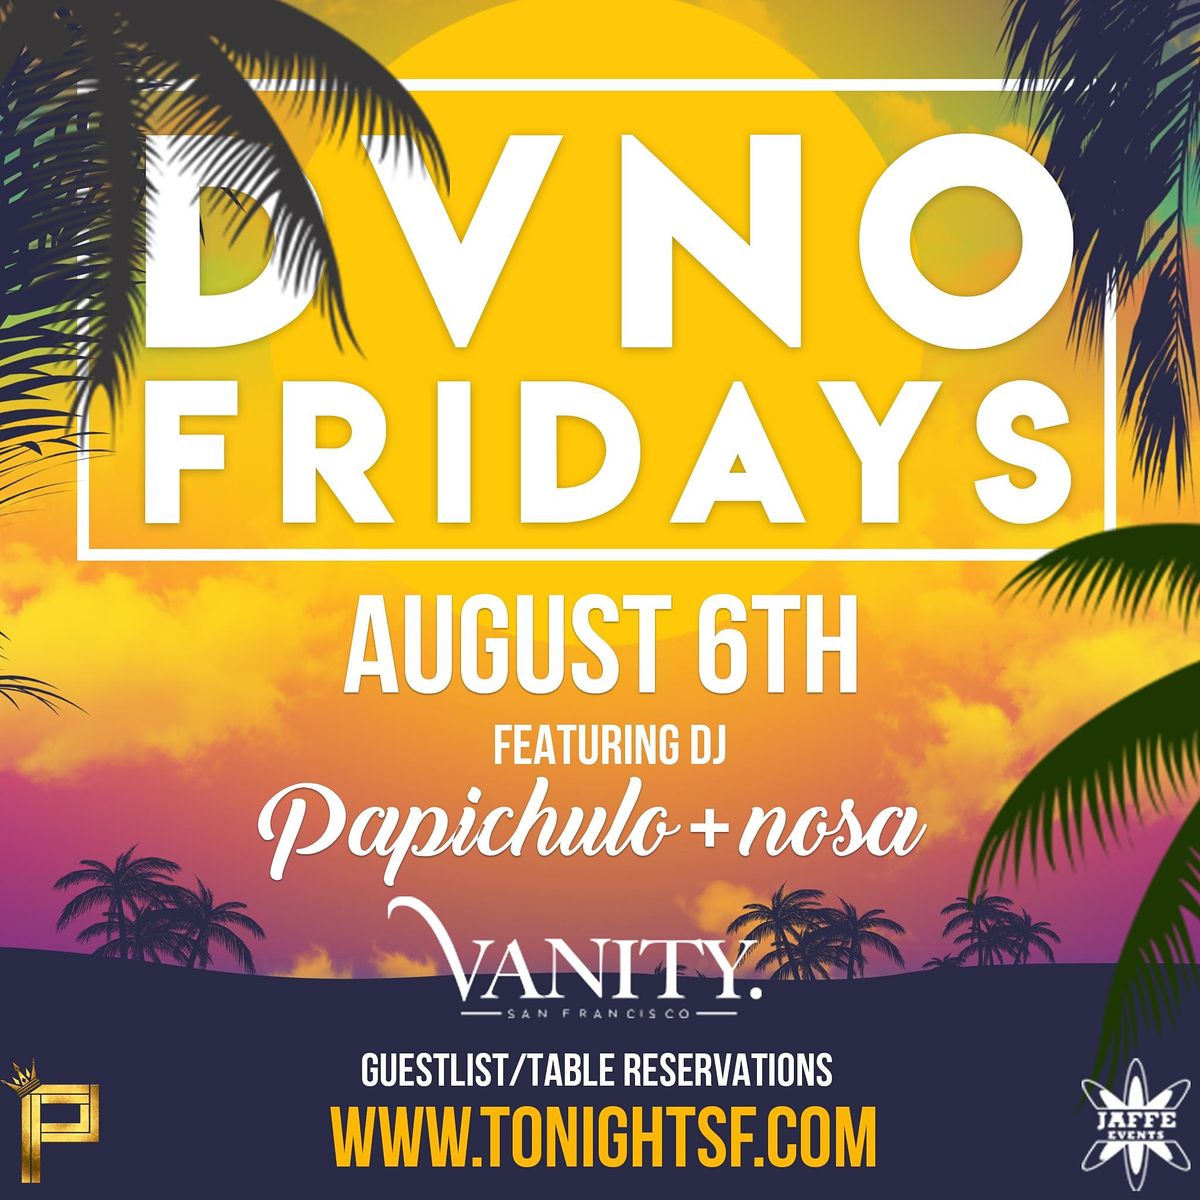 DVNO Fridays at Vanity: Papichulo + NOSA